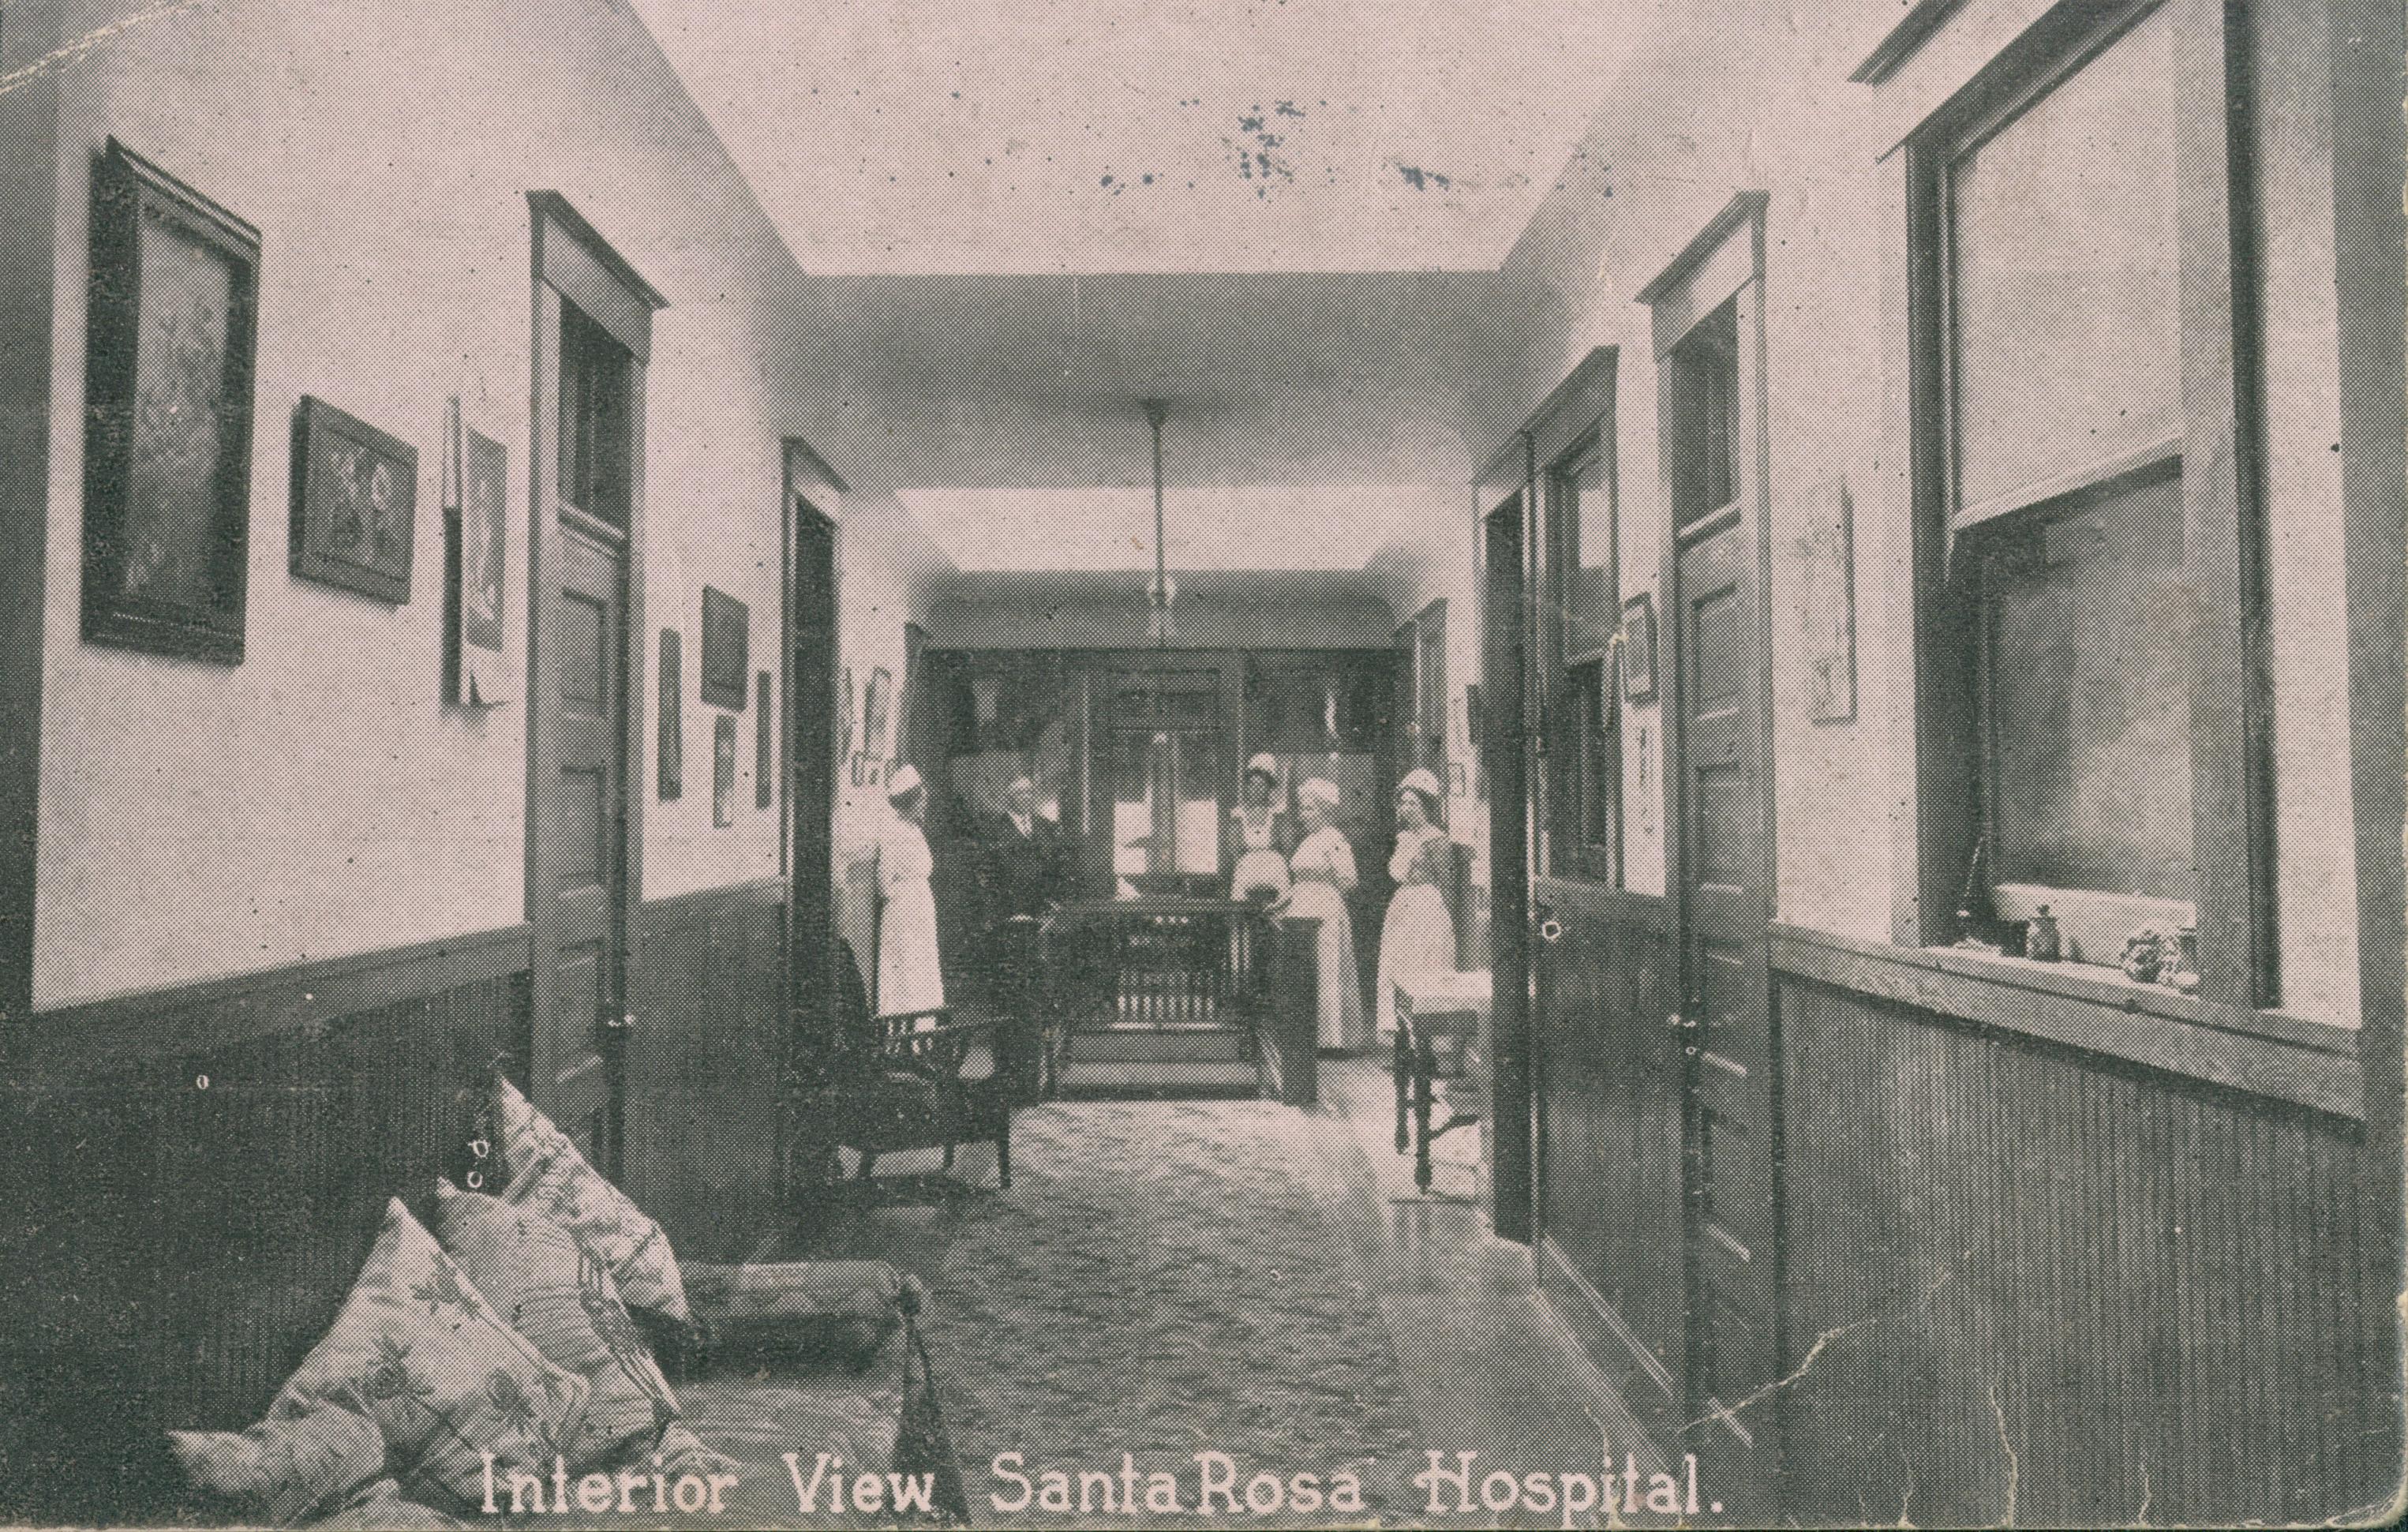 Shows several nurses standing in an interior hallway at Santa Rosa hospital.